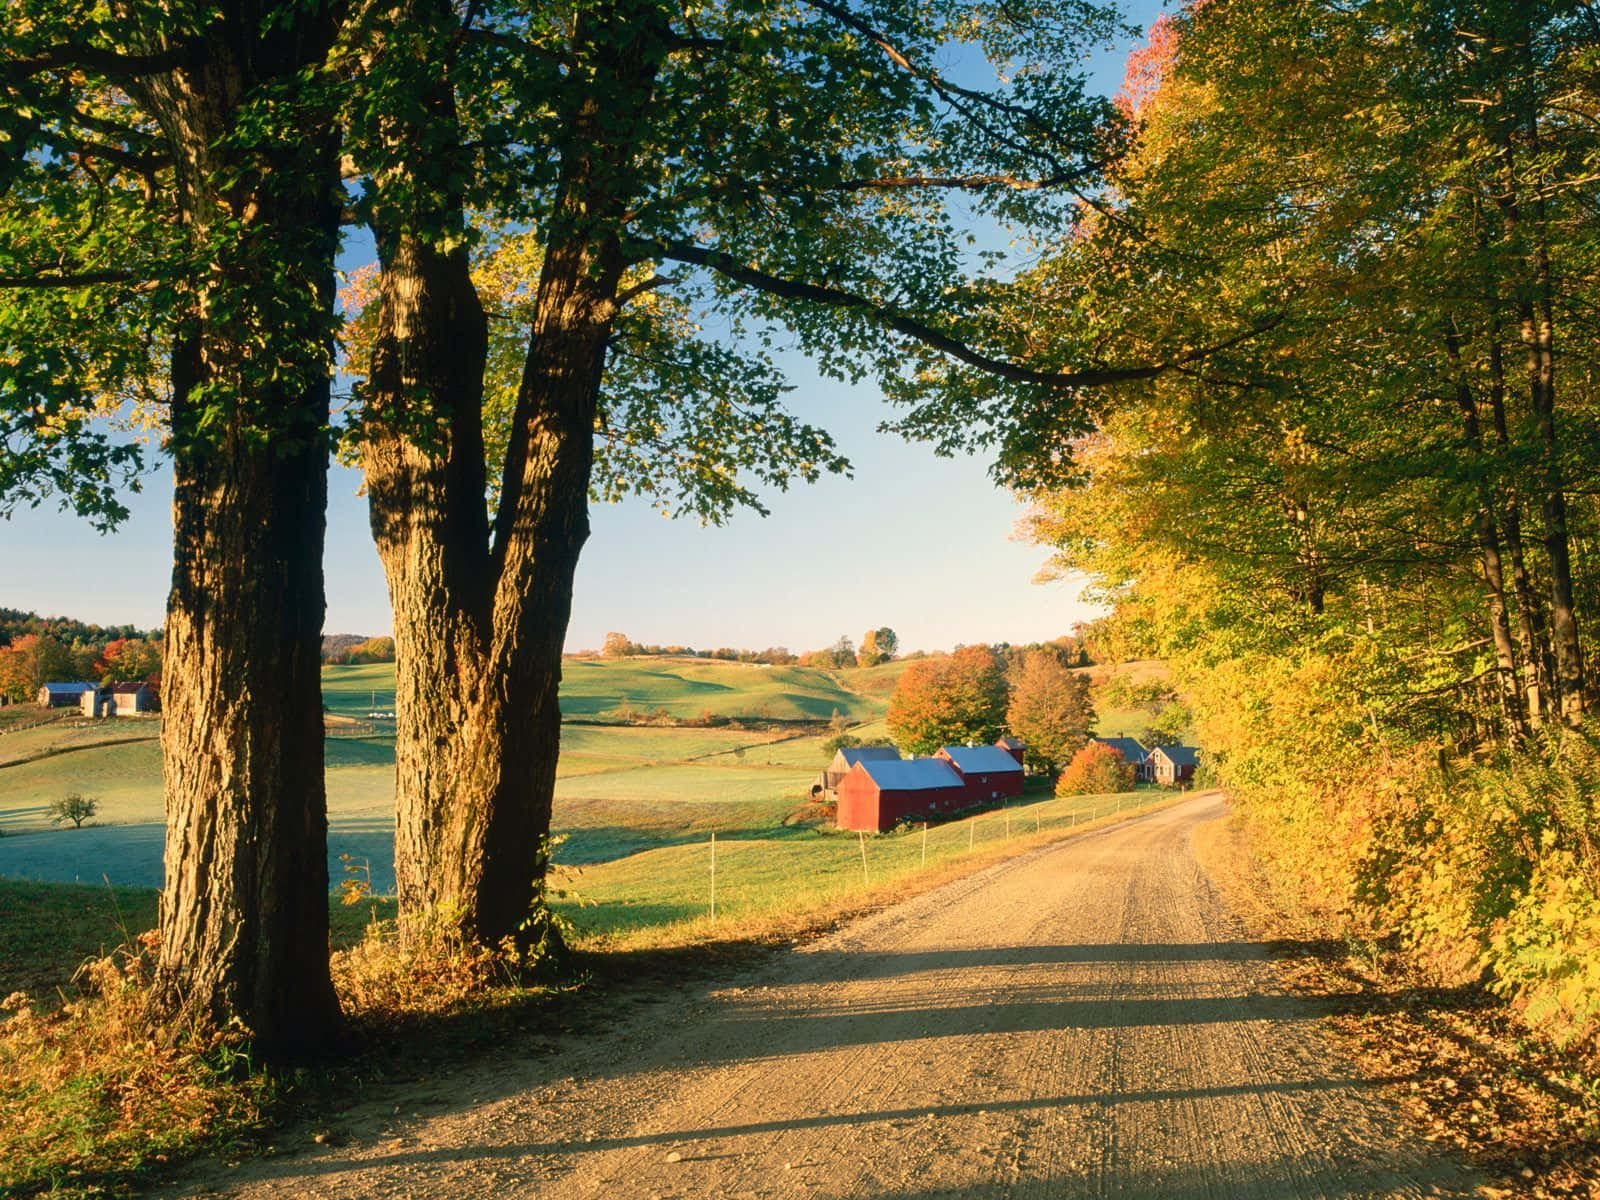 "A view of a flourishing farm landscape."